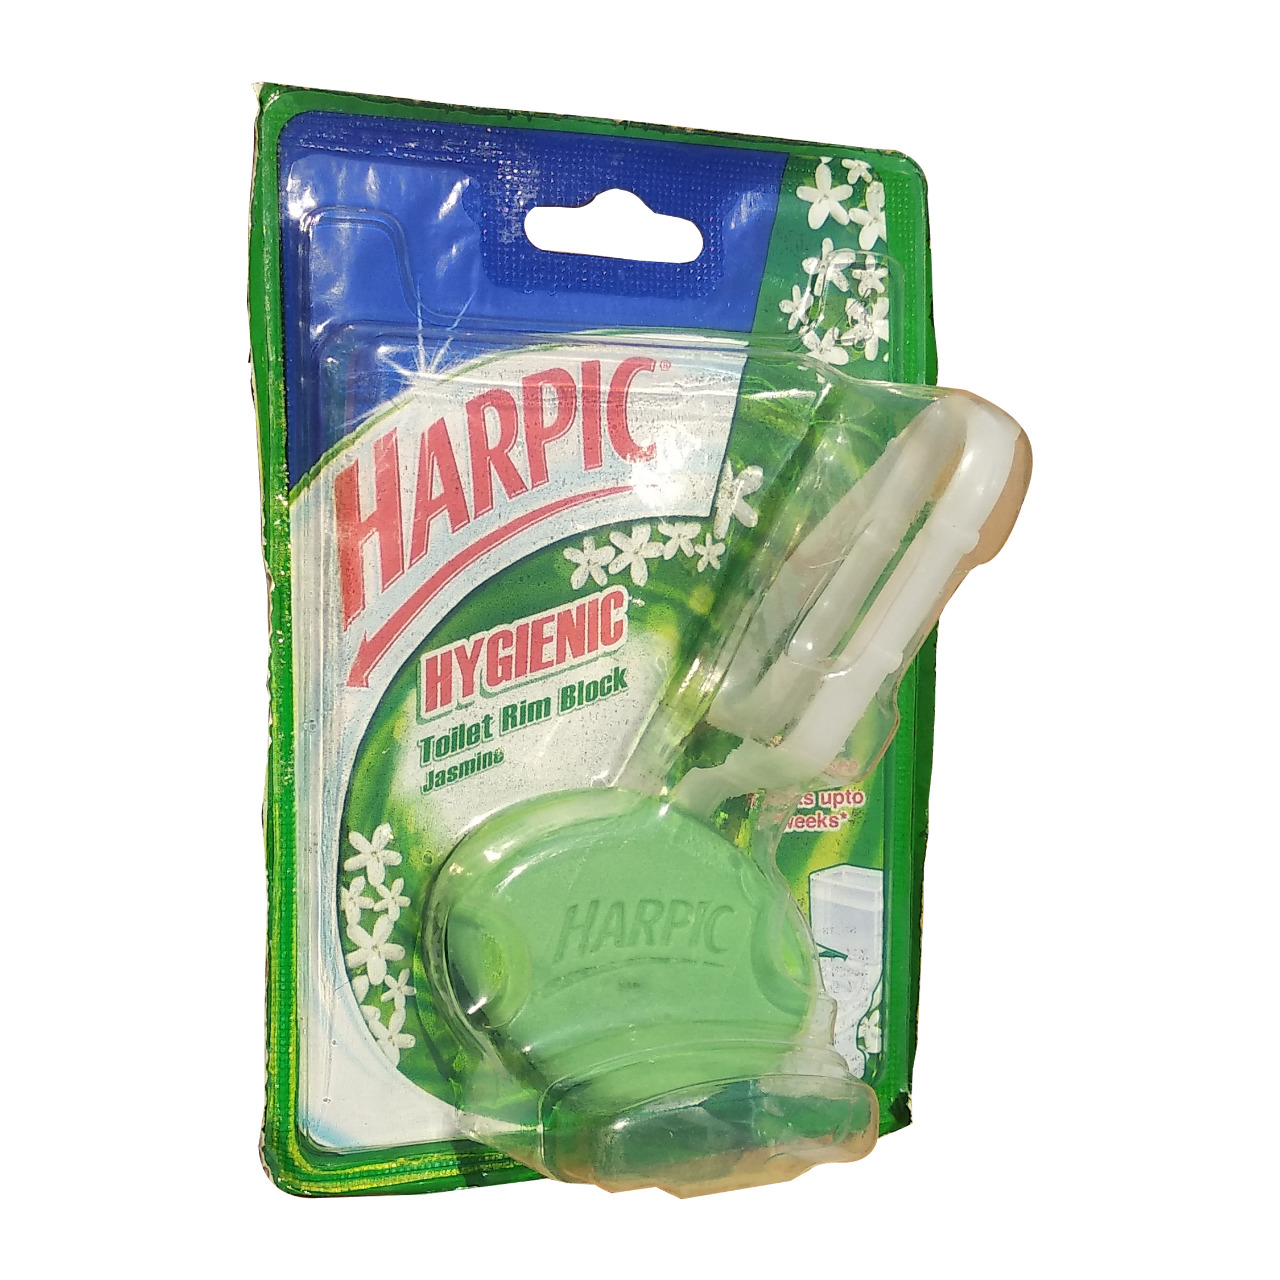 Harpic Hygienic 26g